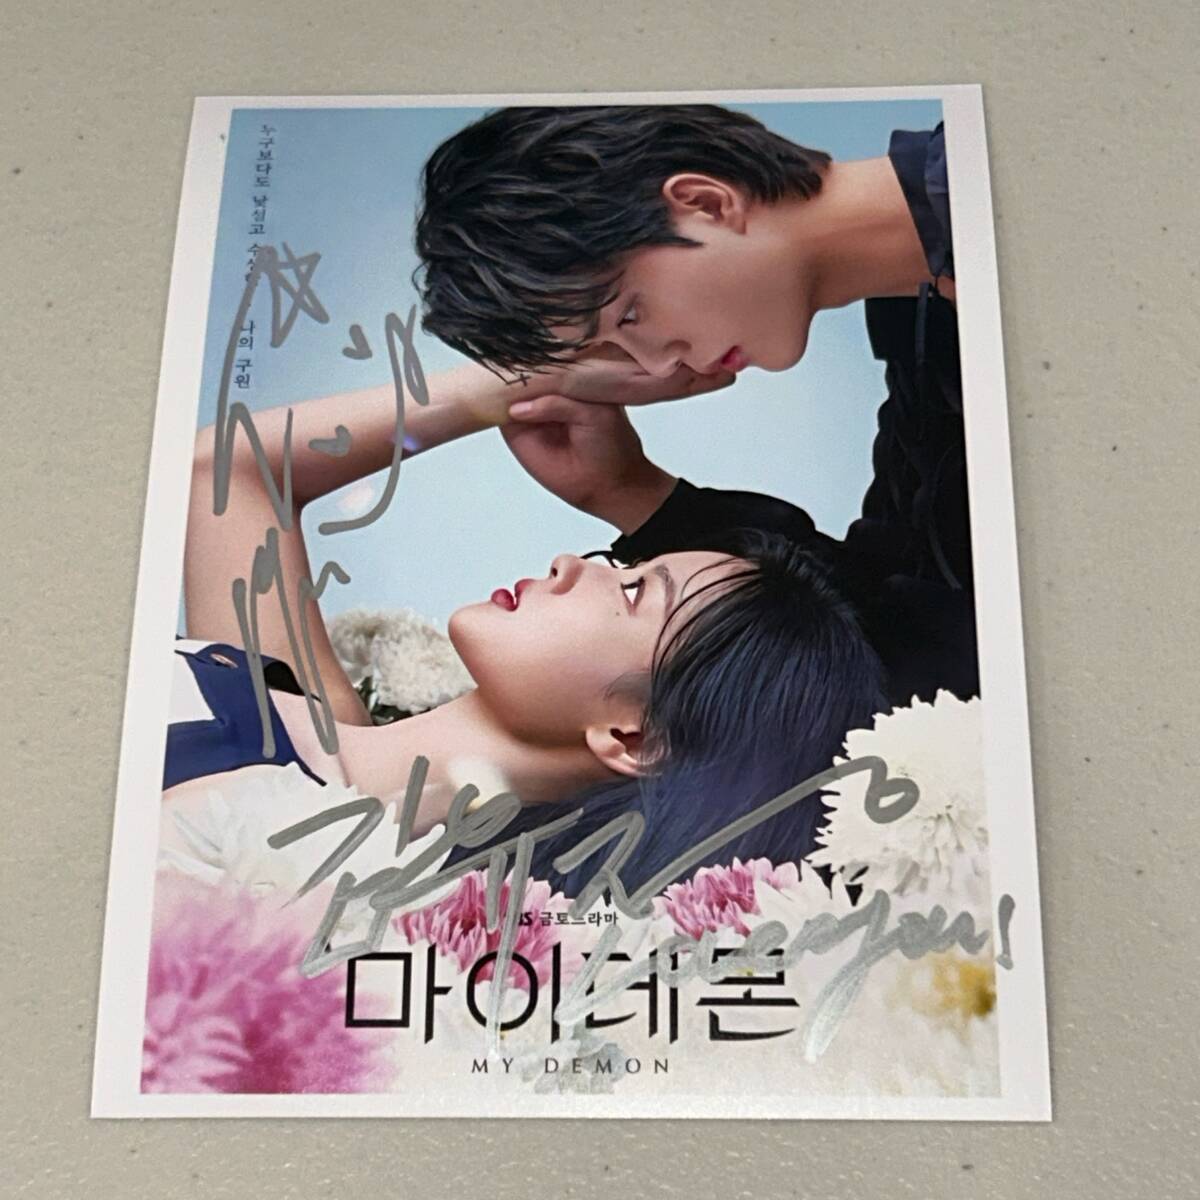  Kim *yu John /son* gun * корейская драма [ мой * Demon ] steel фотография (2L размер )* автограф автограф 